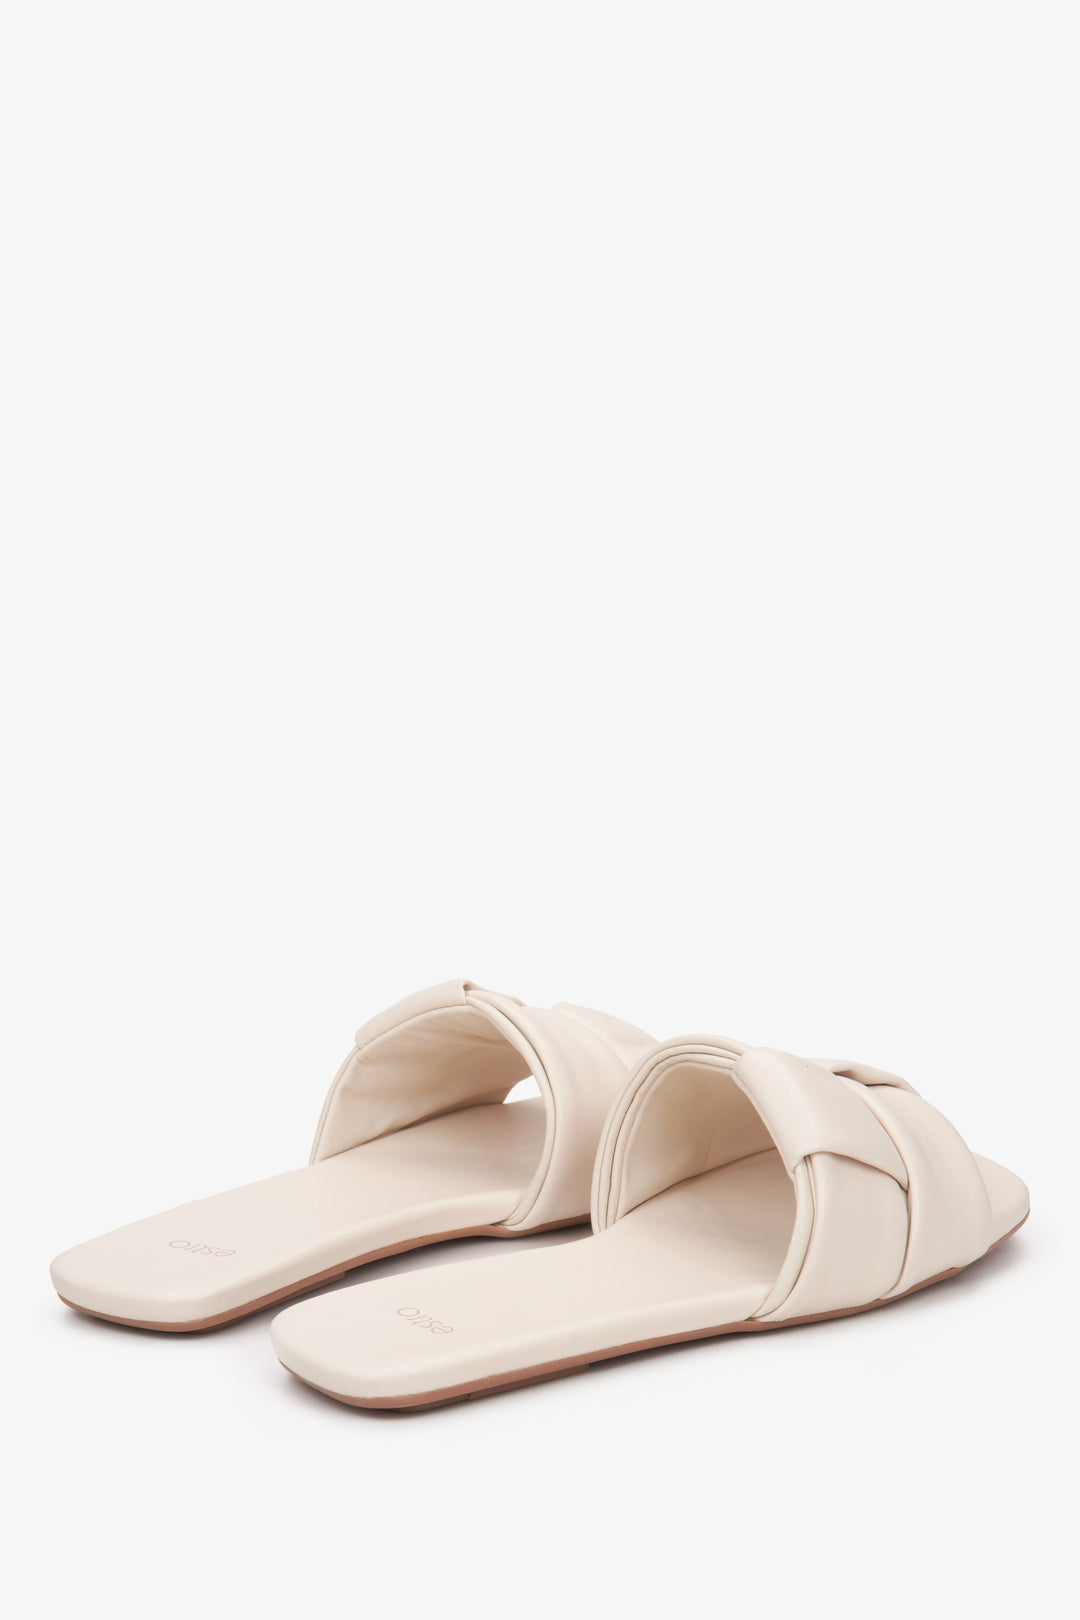 Estro's Light Beige Patch Leather Slide Sandals for Women